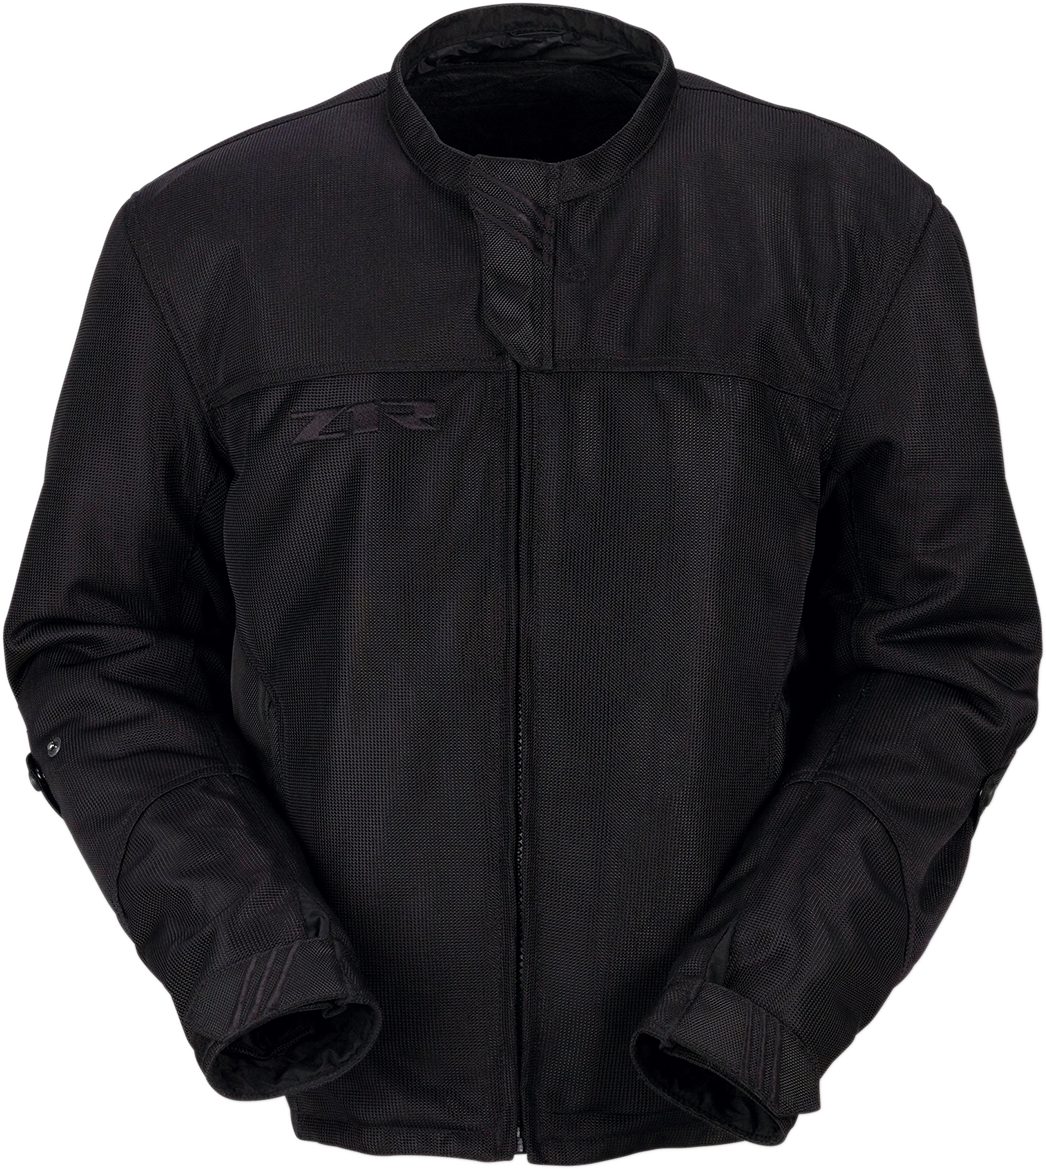 Z1R Gust Mesh Waterproof Jacket - Black - 4XL 2820-4947